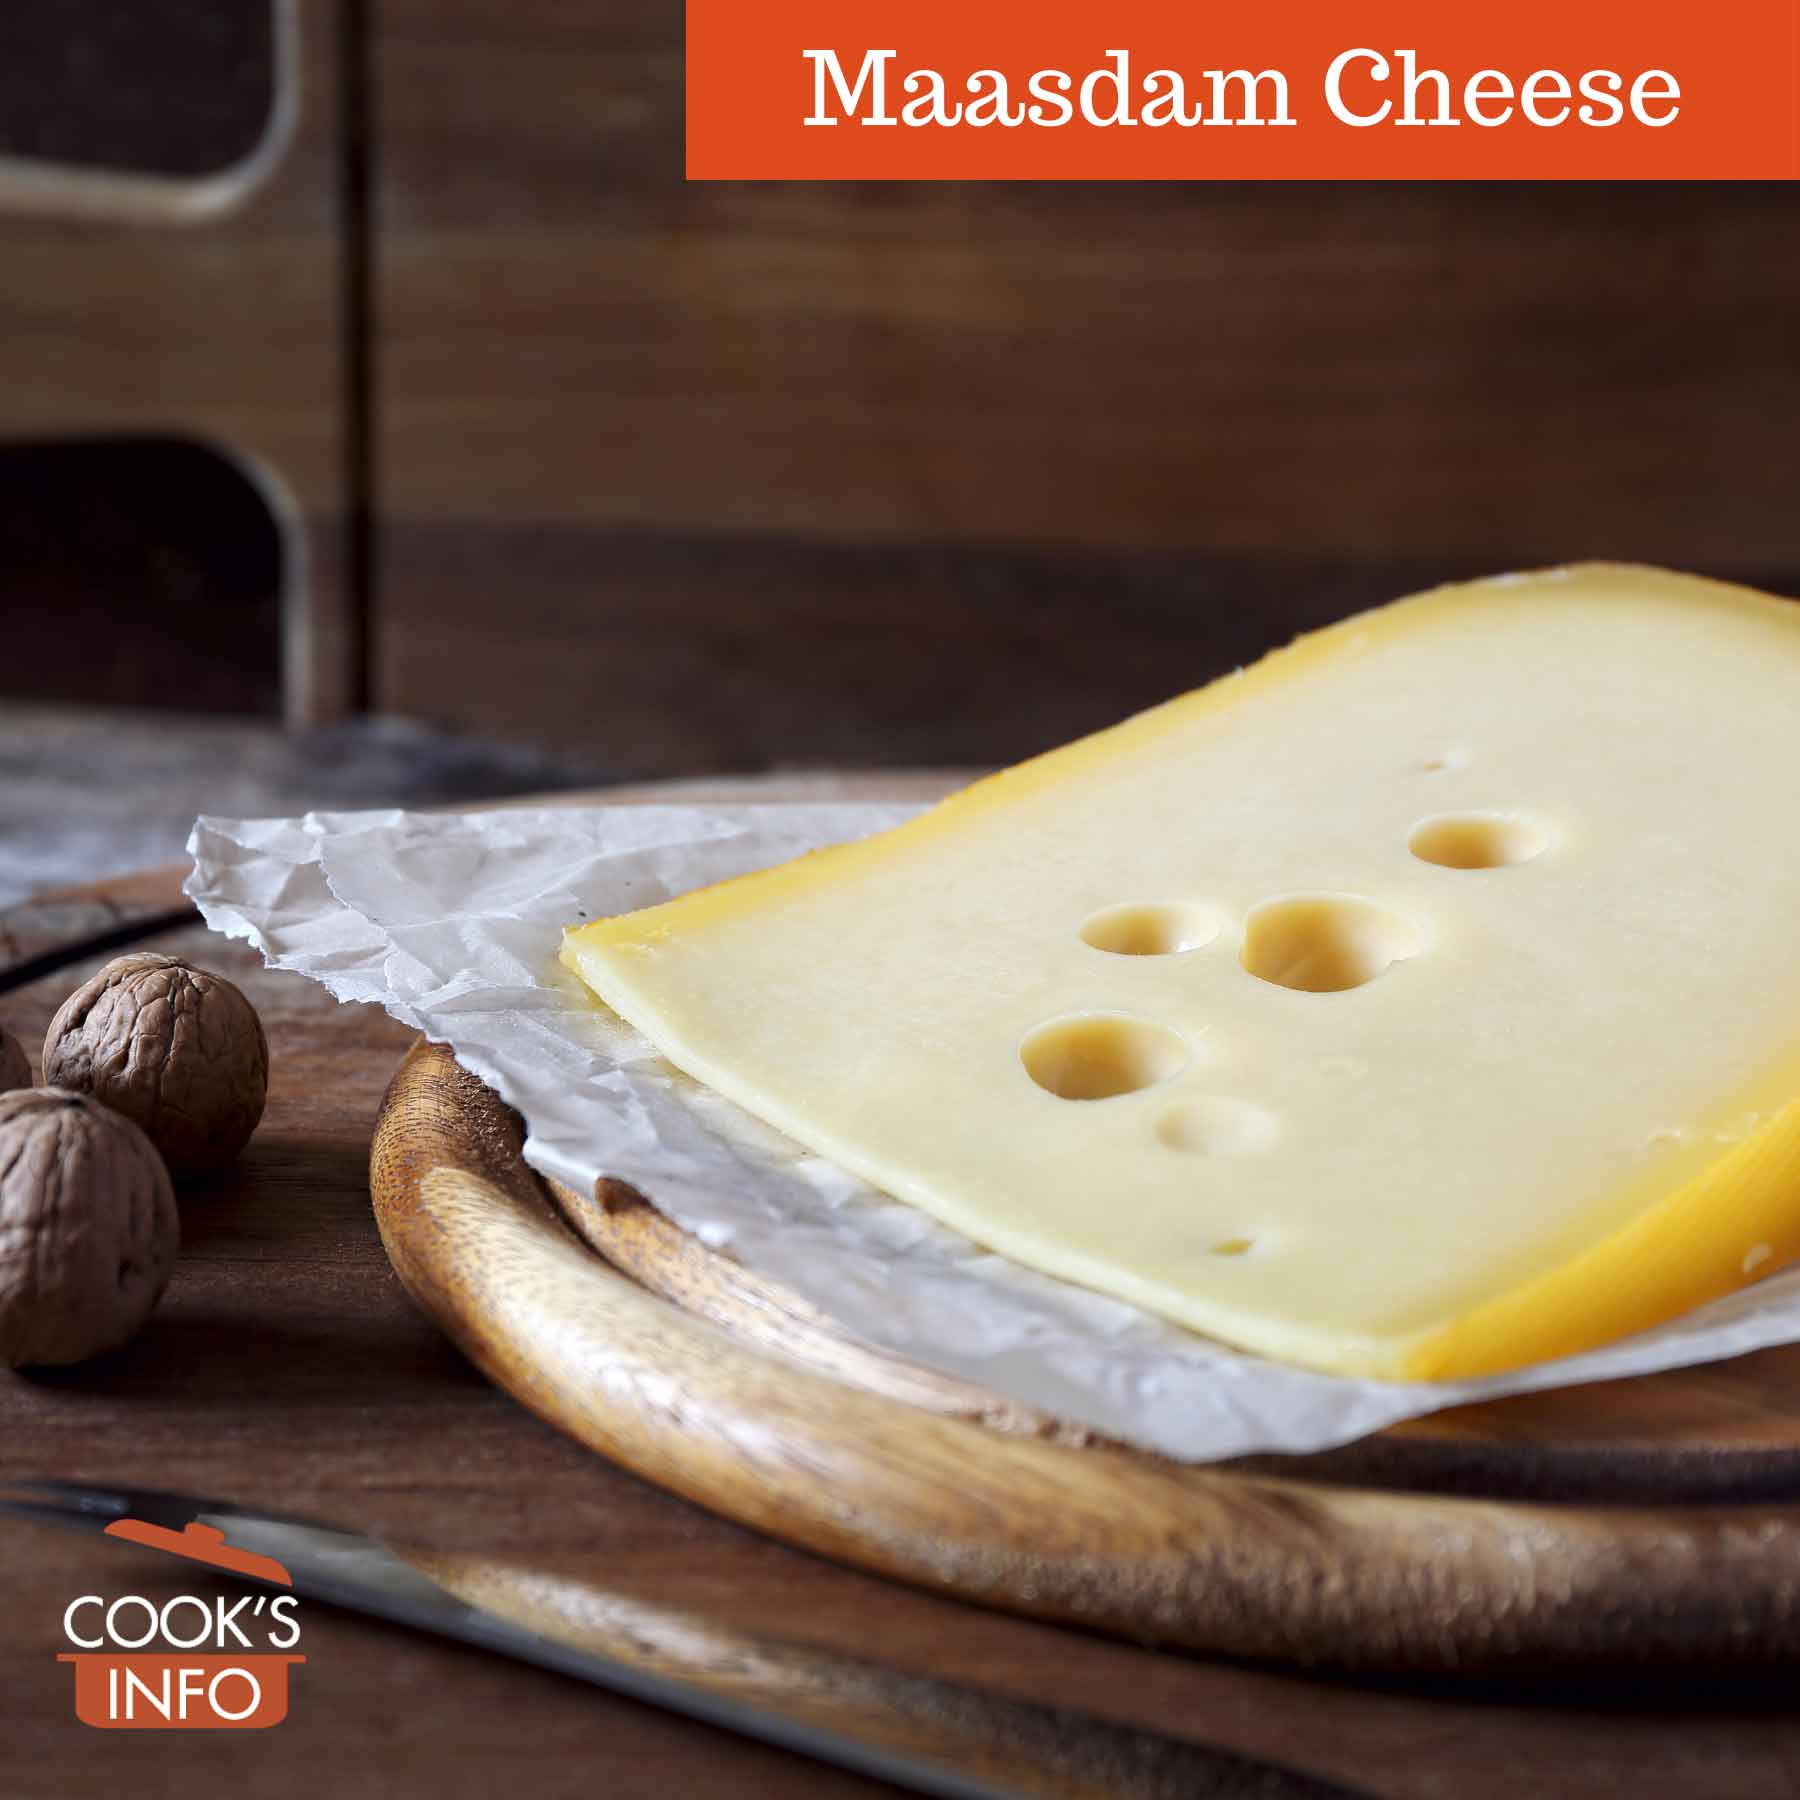 Maasdam Cheese and walnuts on a wood cutting board